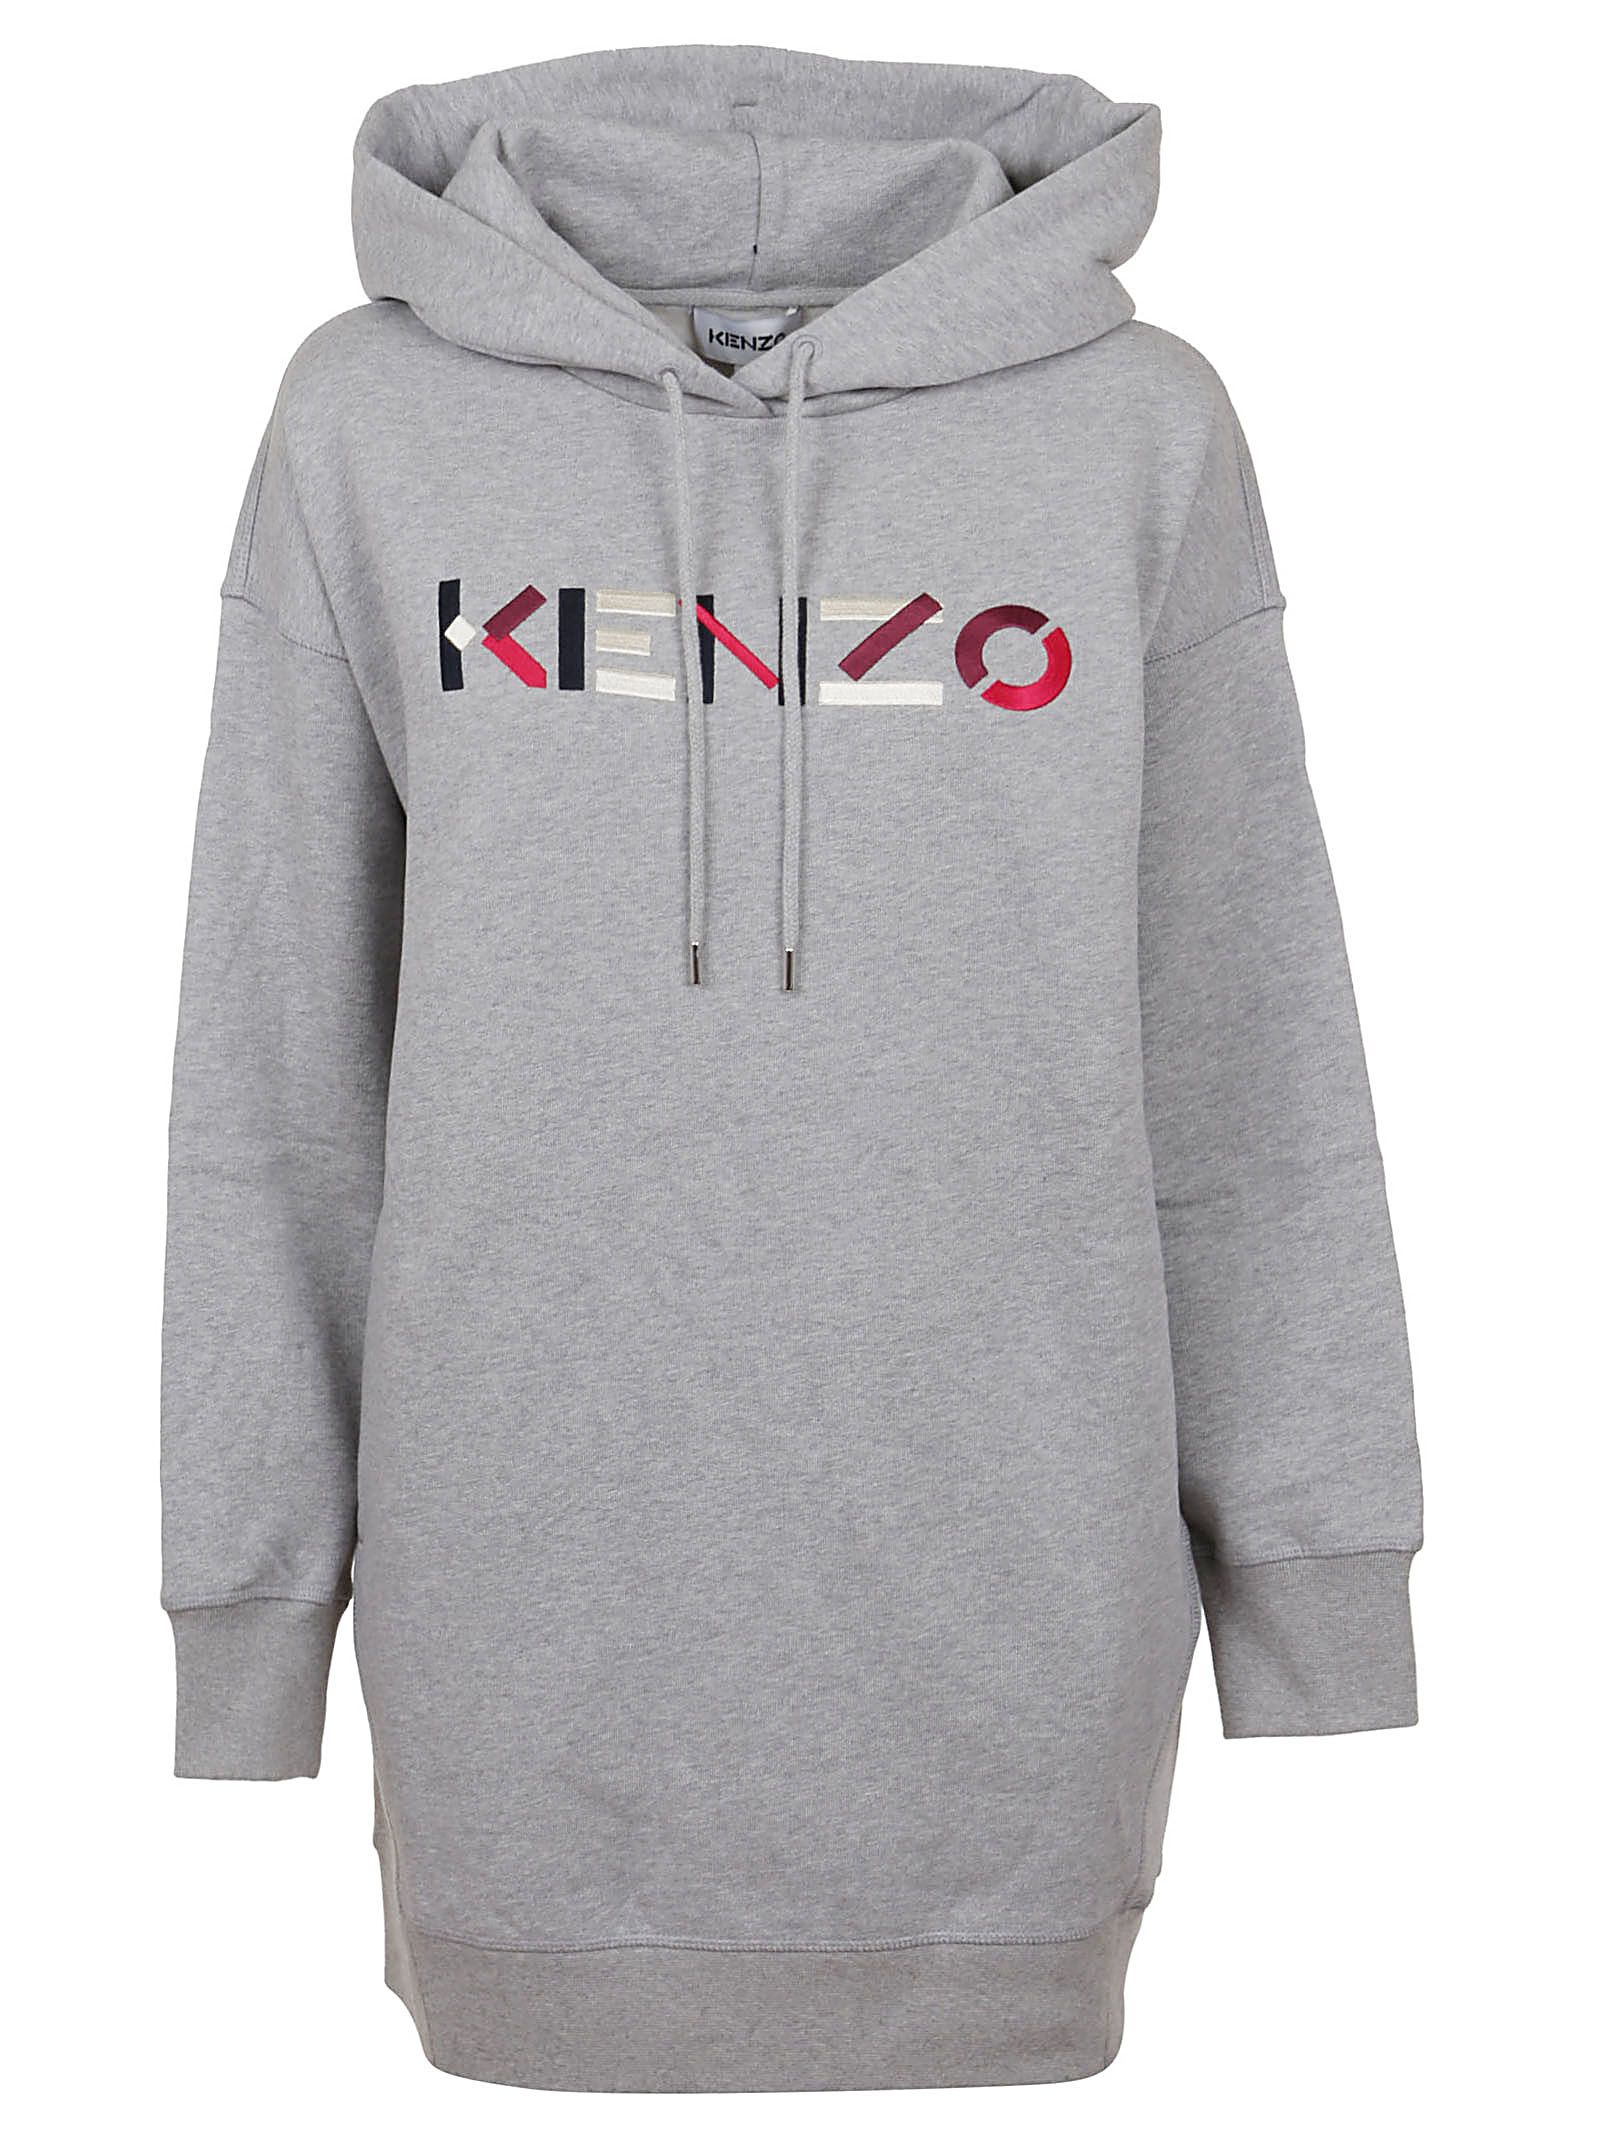 kenzo hoodie price